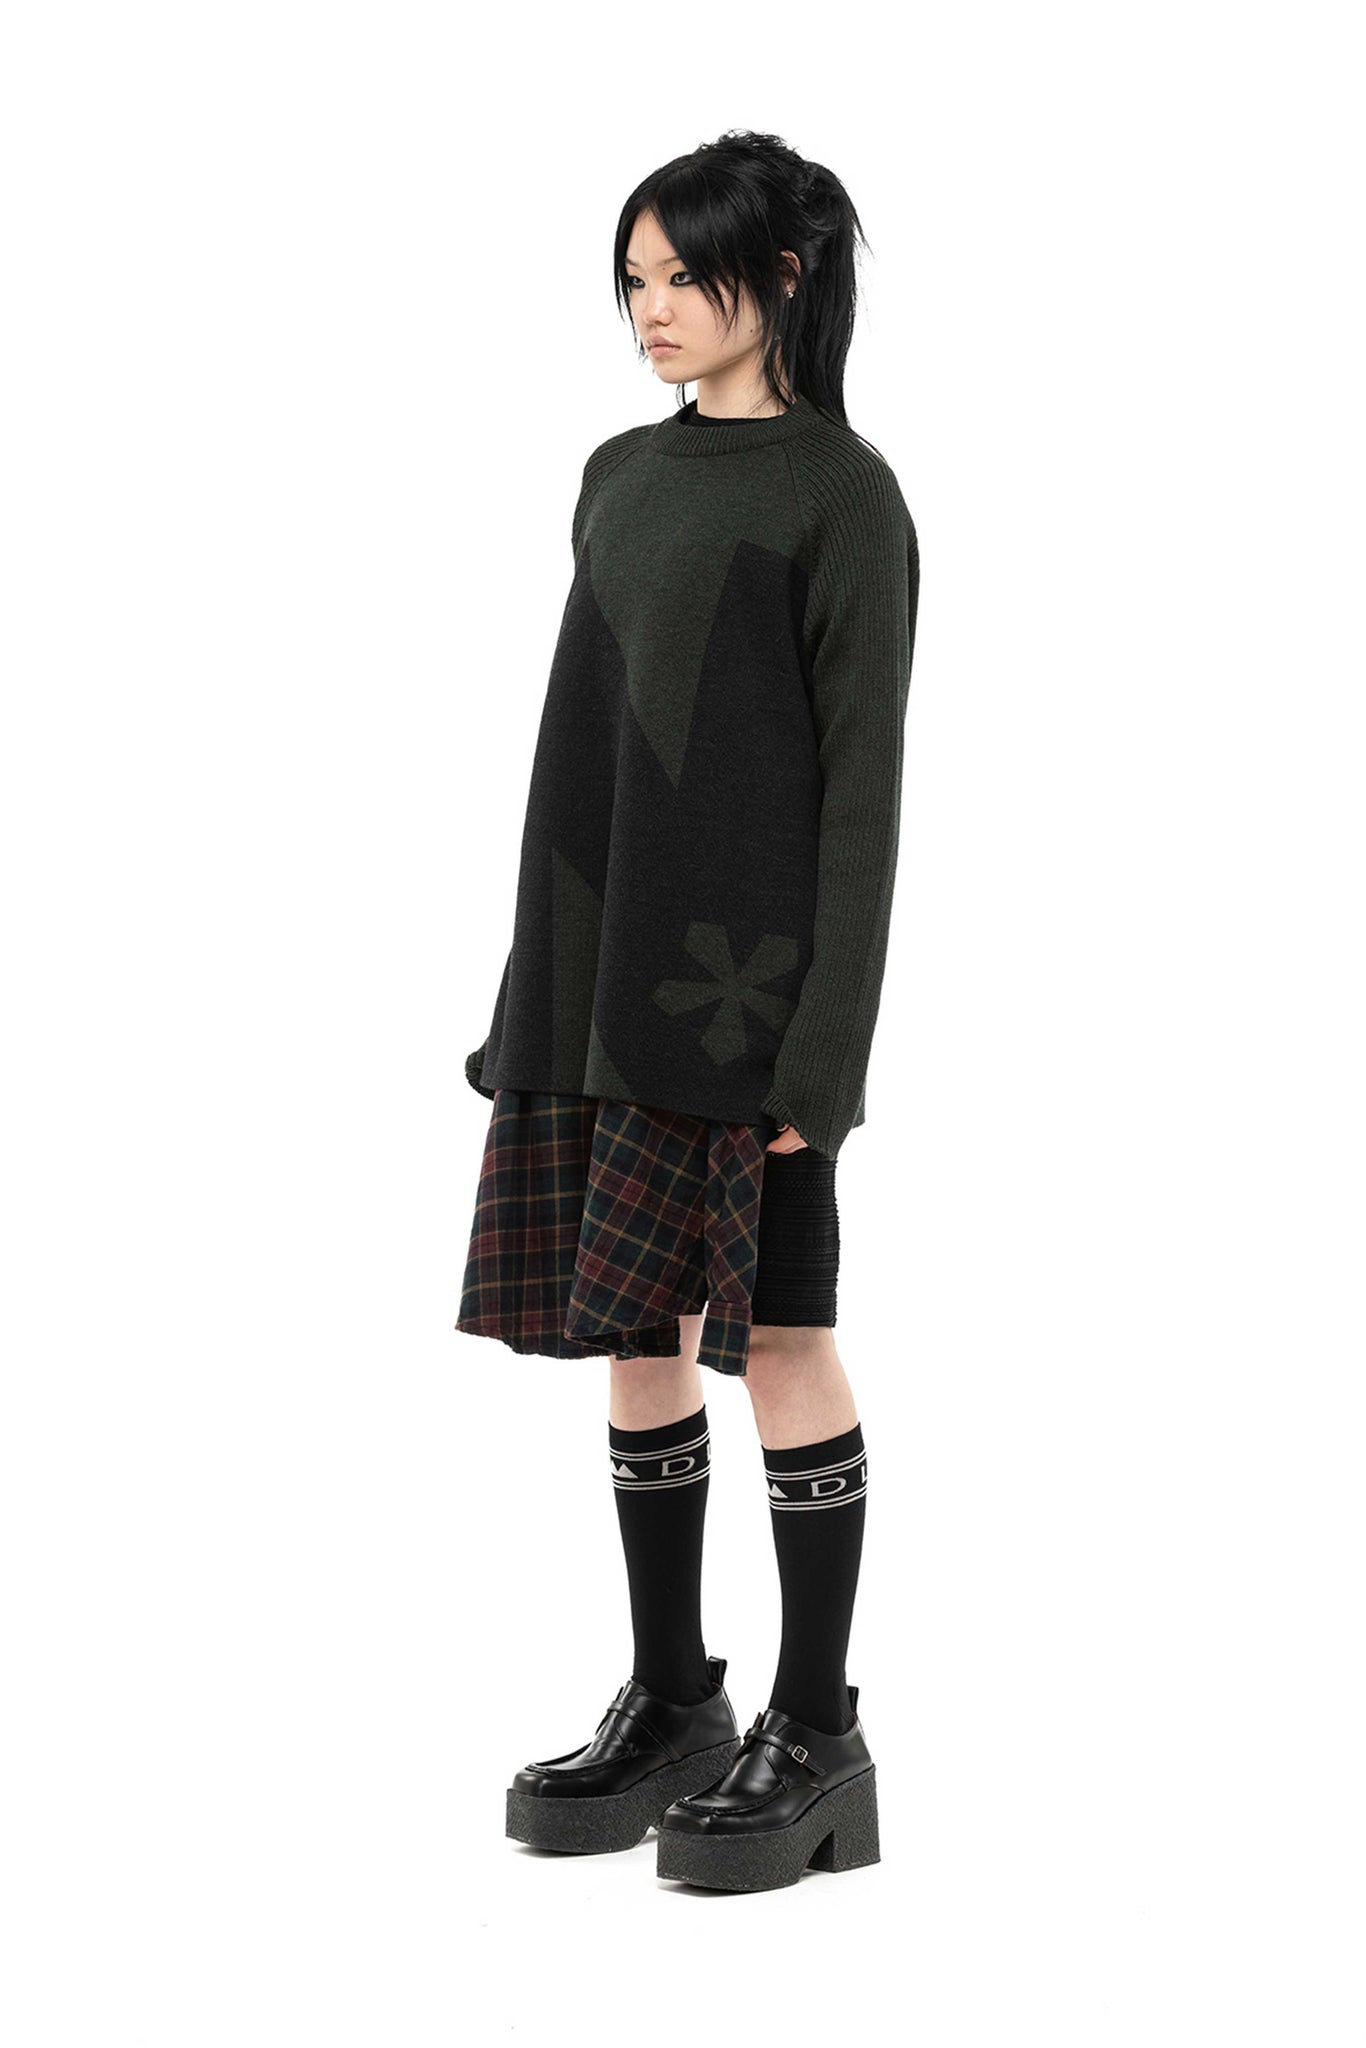 Emblem Sweater | Merino Wool | Fern